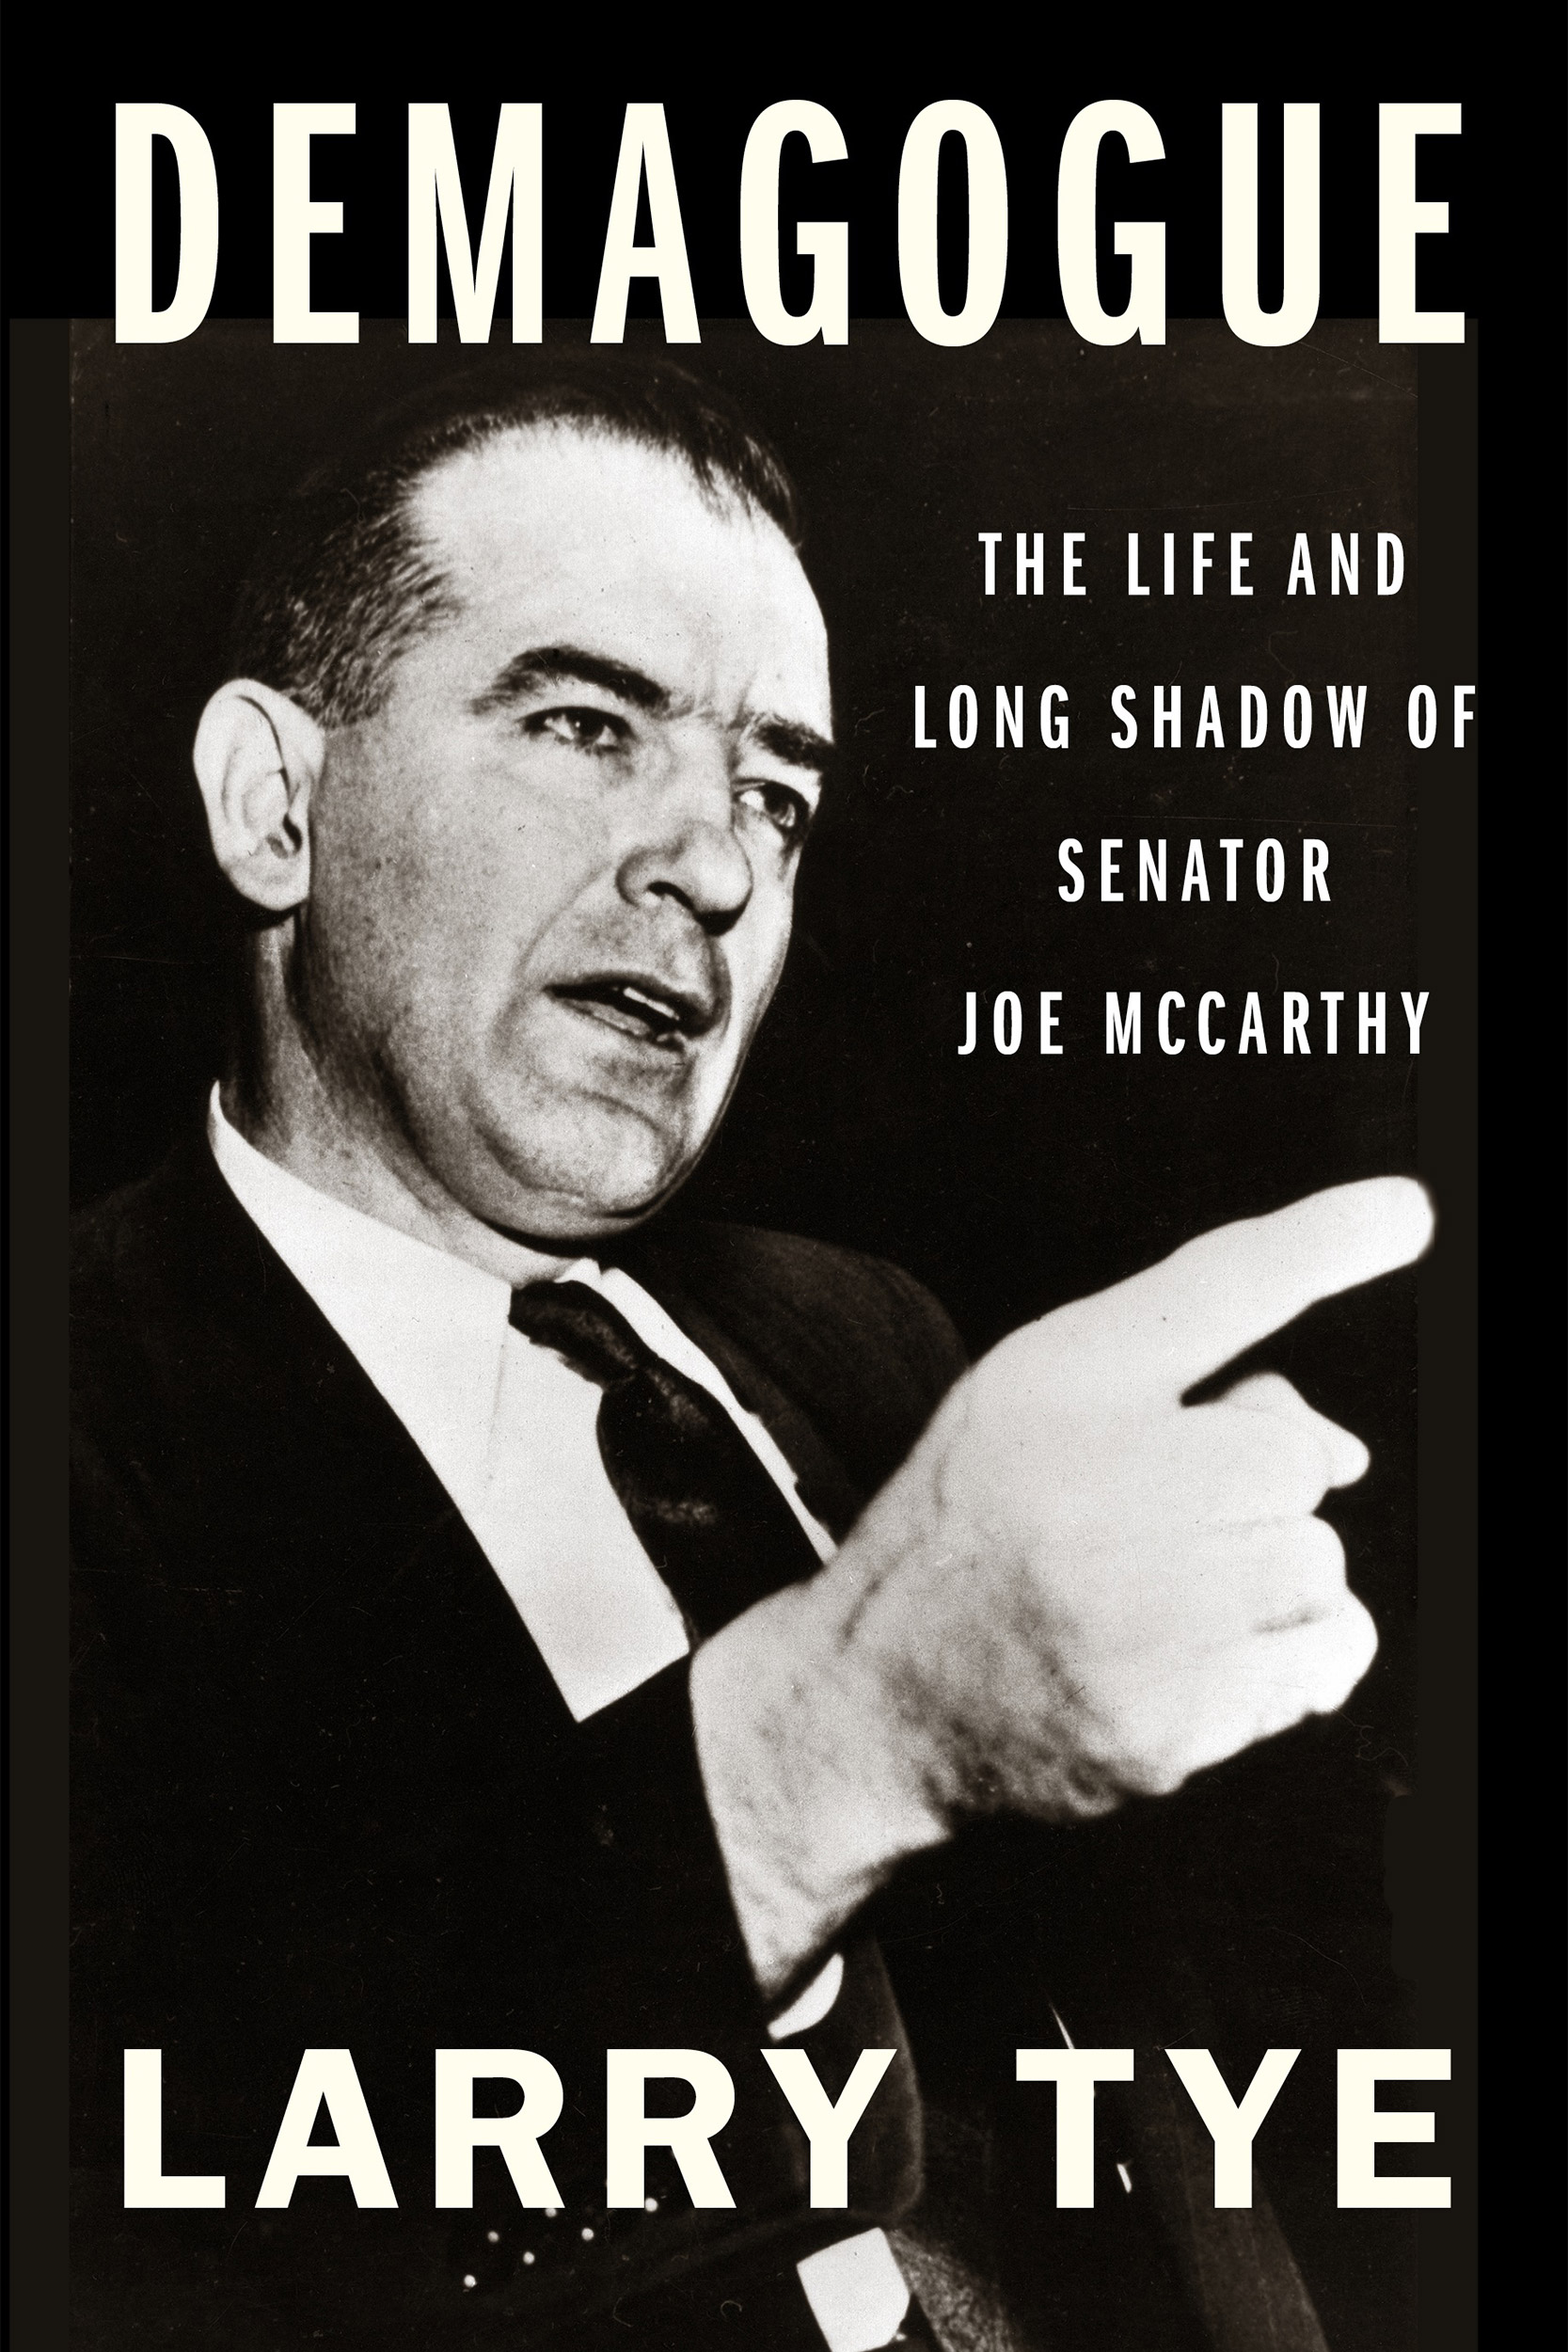 “Demagogue: The Life and Long Shadow of Senator Joe McCarthy” by Larry Tye.